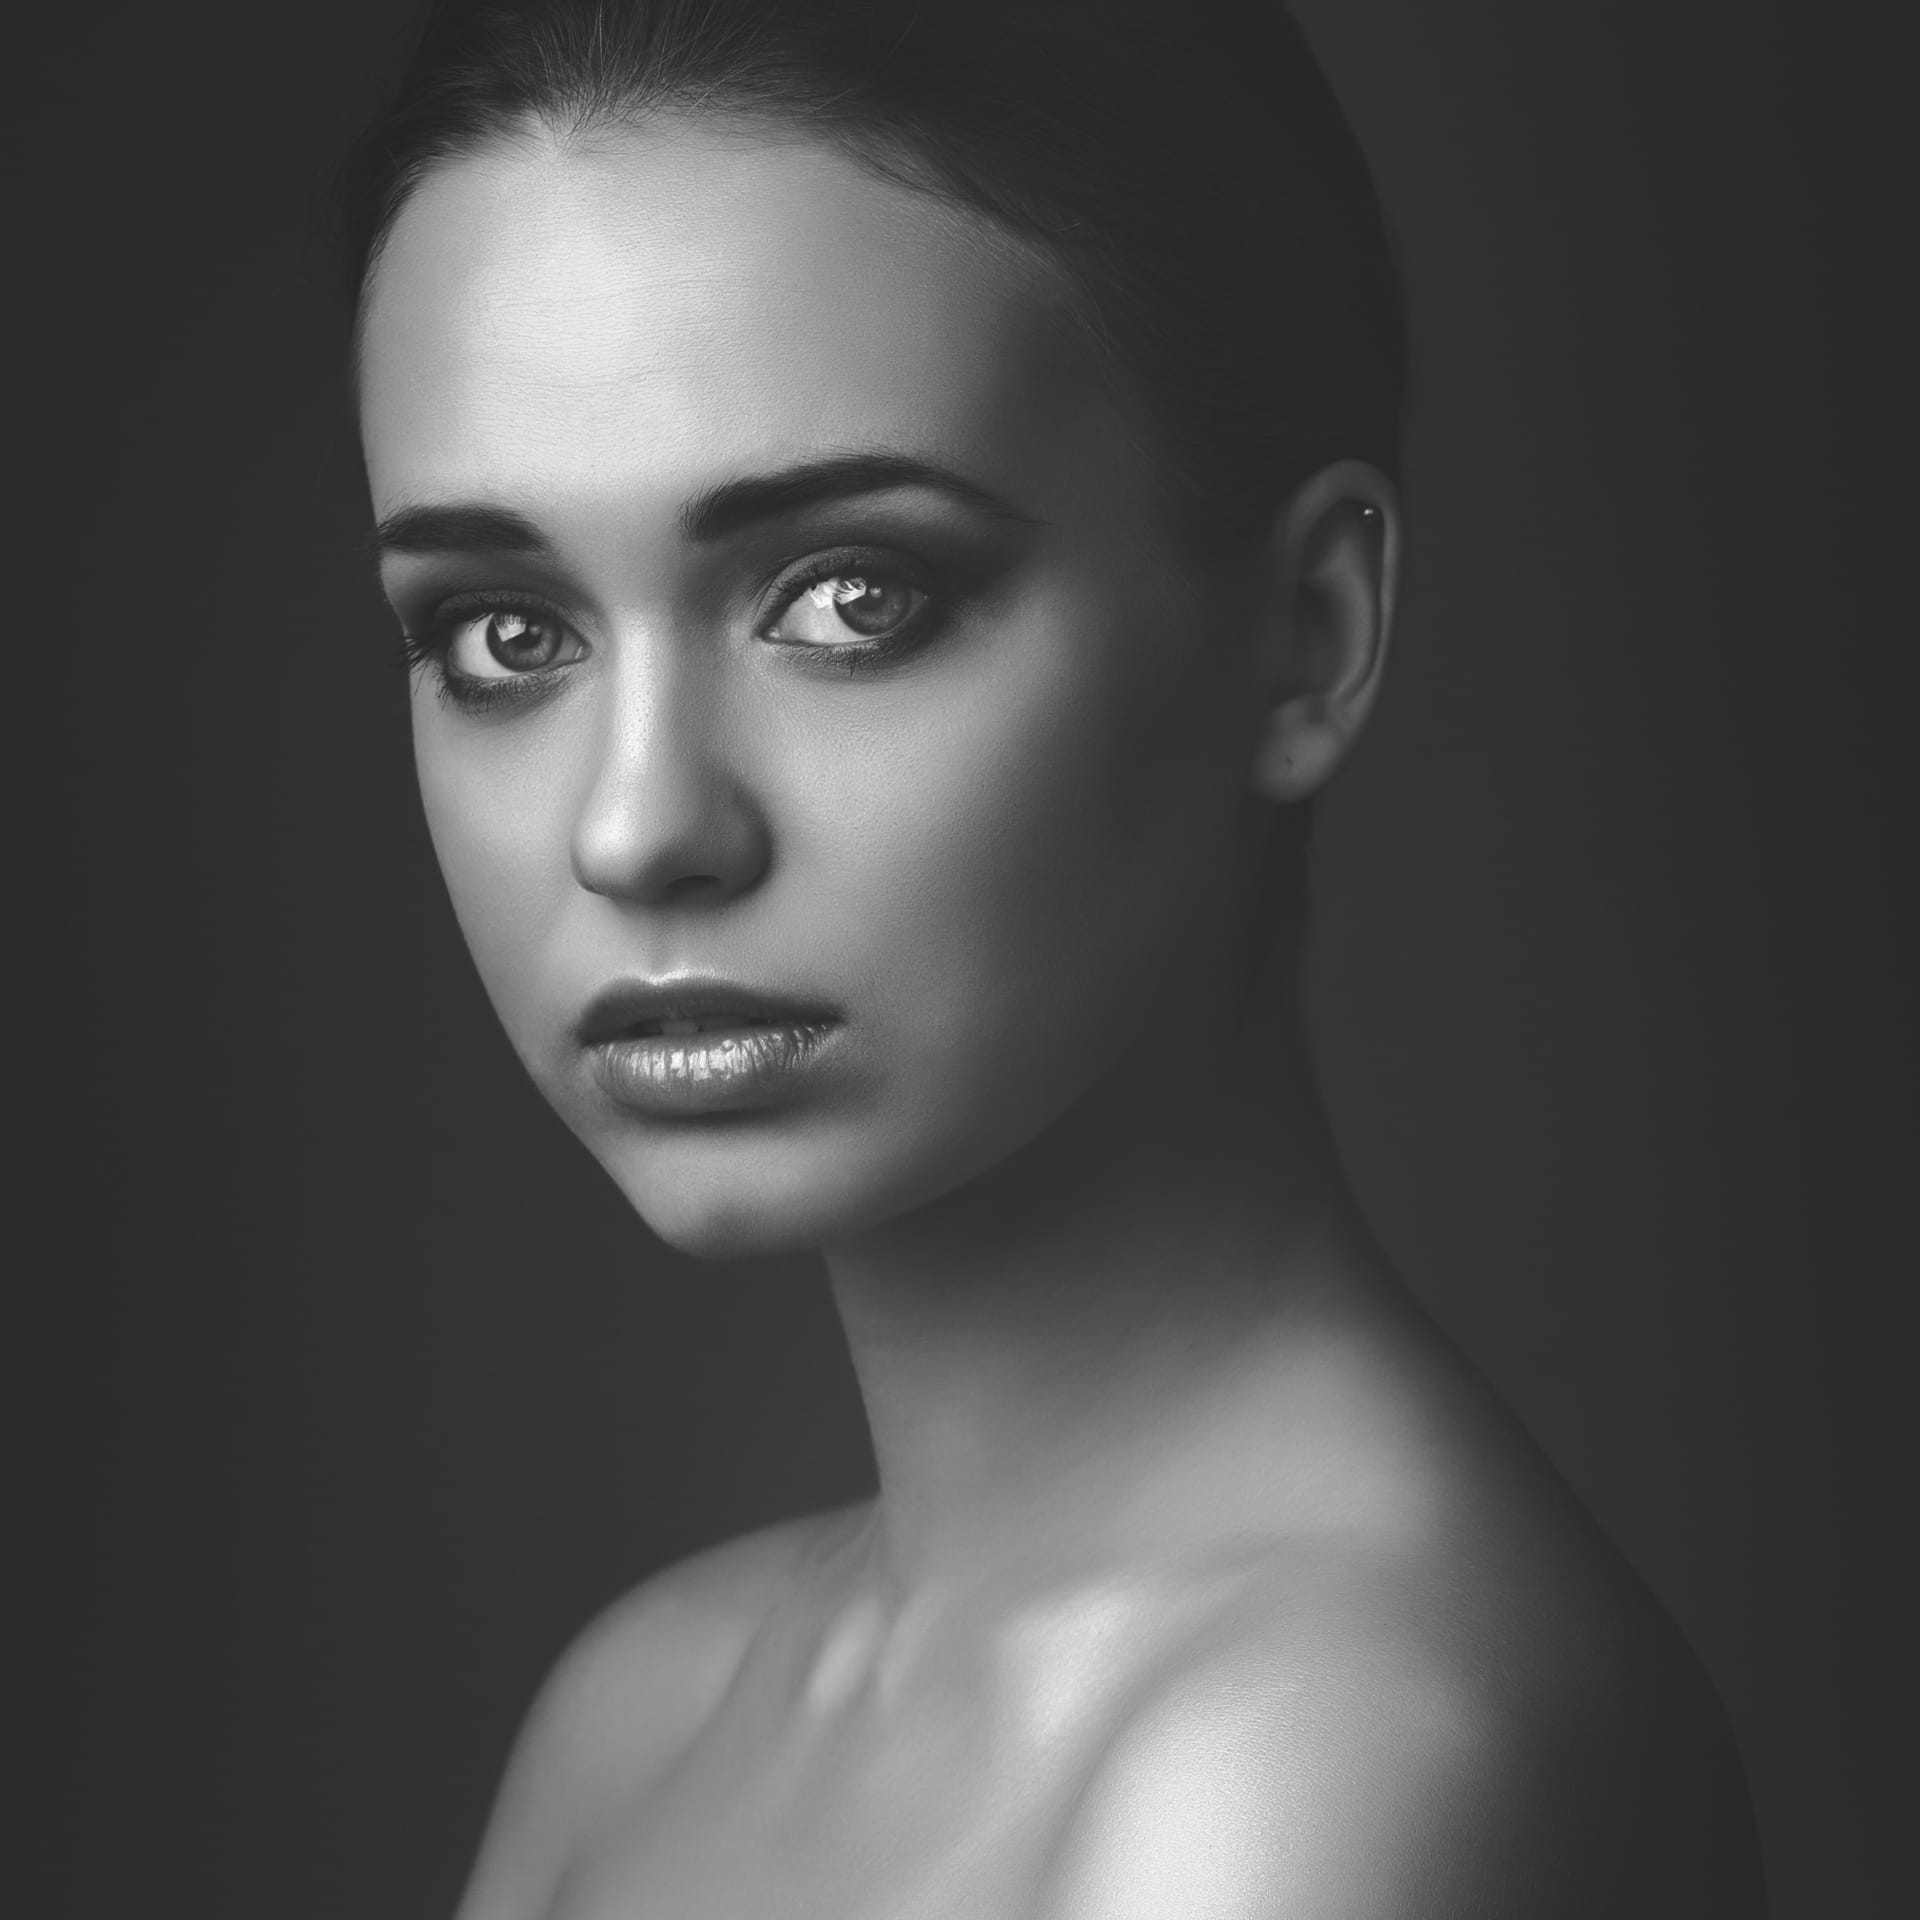 Studio portrait young beautiful girl dark background black white image